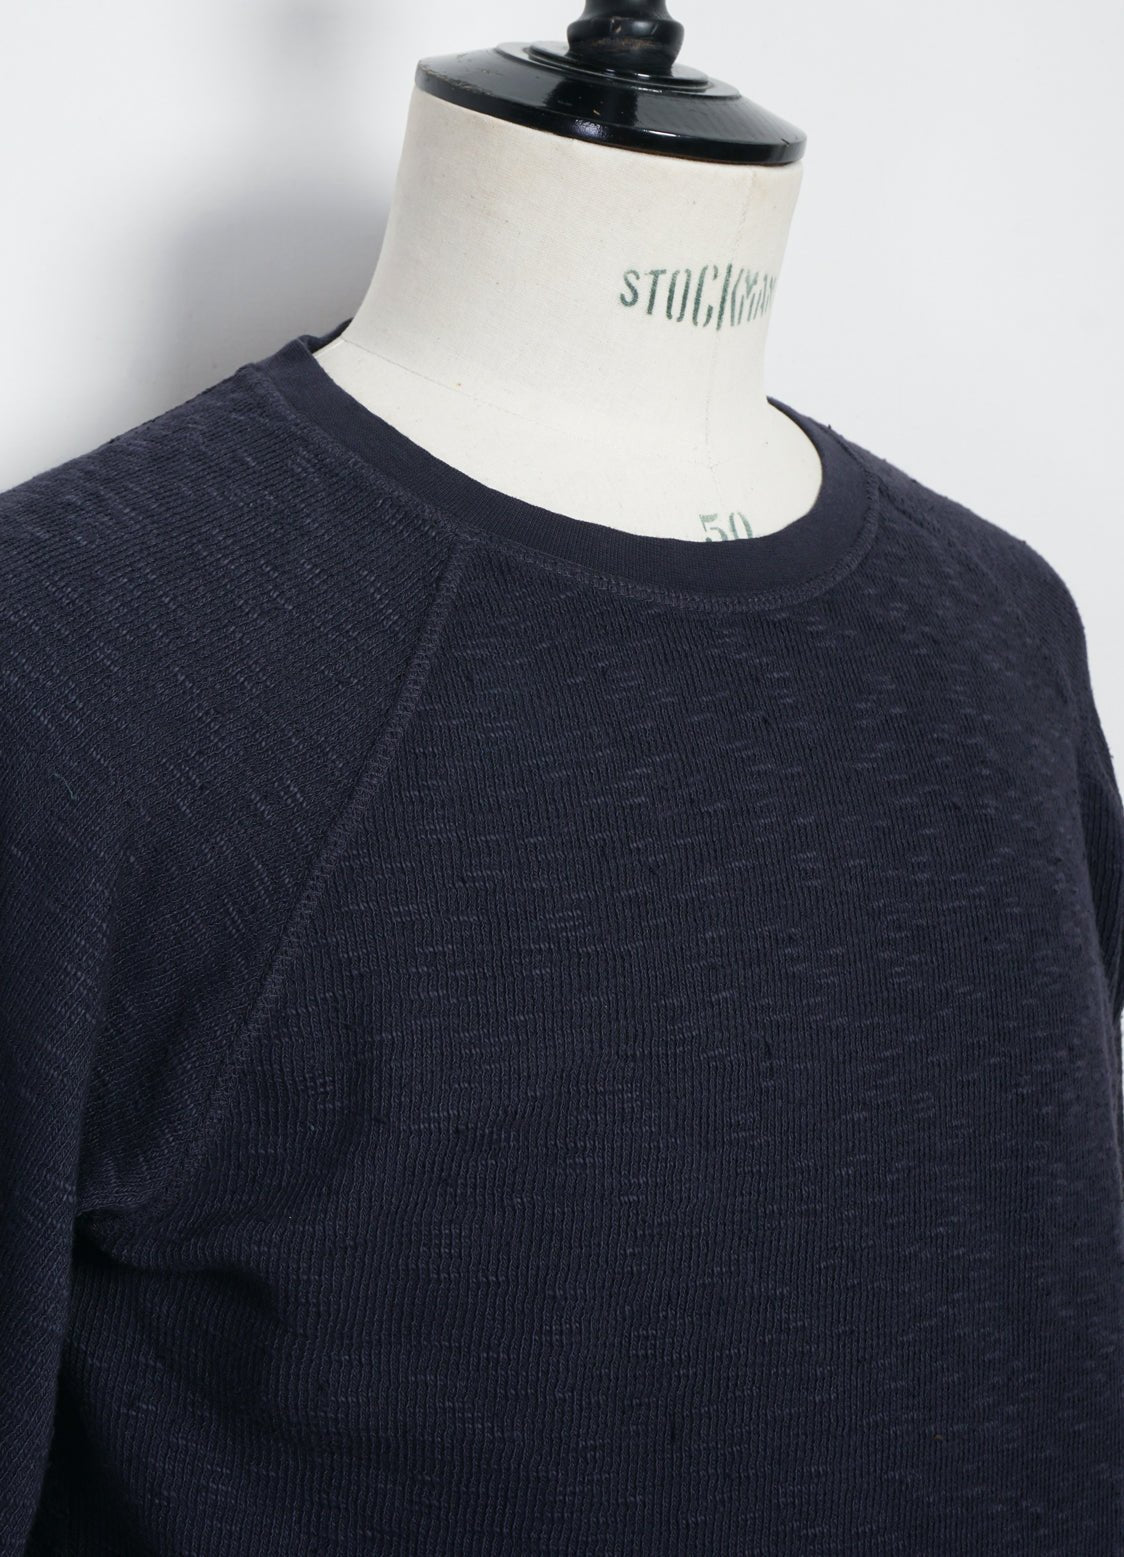 HANSEN GARMENTS - FELIX | Raglan Long Sleeve T-shirt | Indigo-like - HANSEN Garments